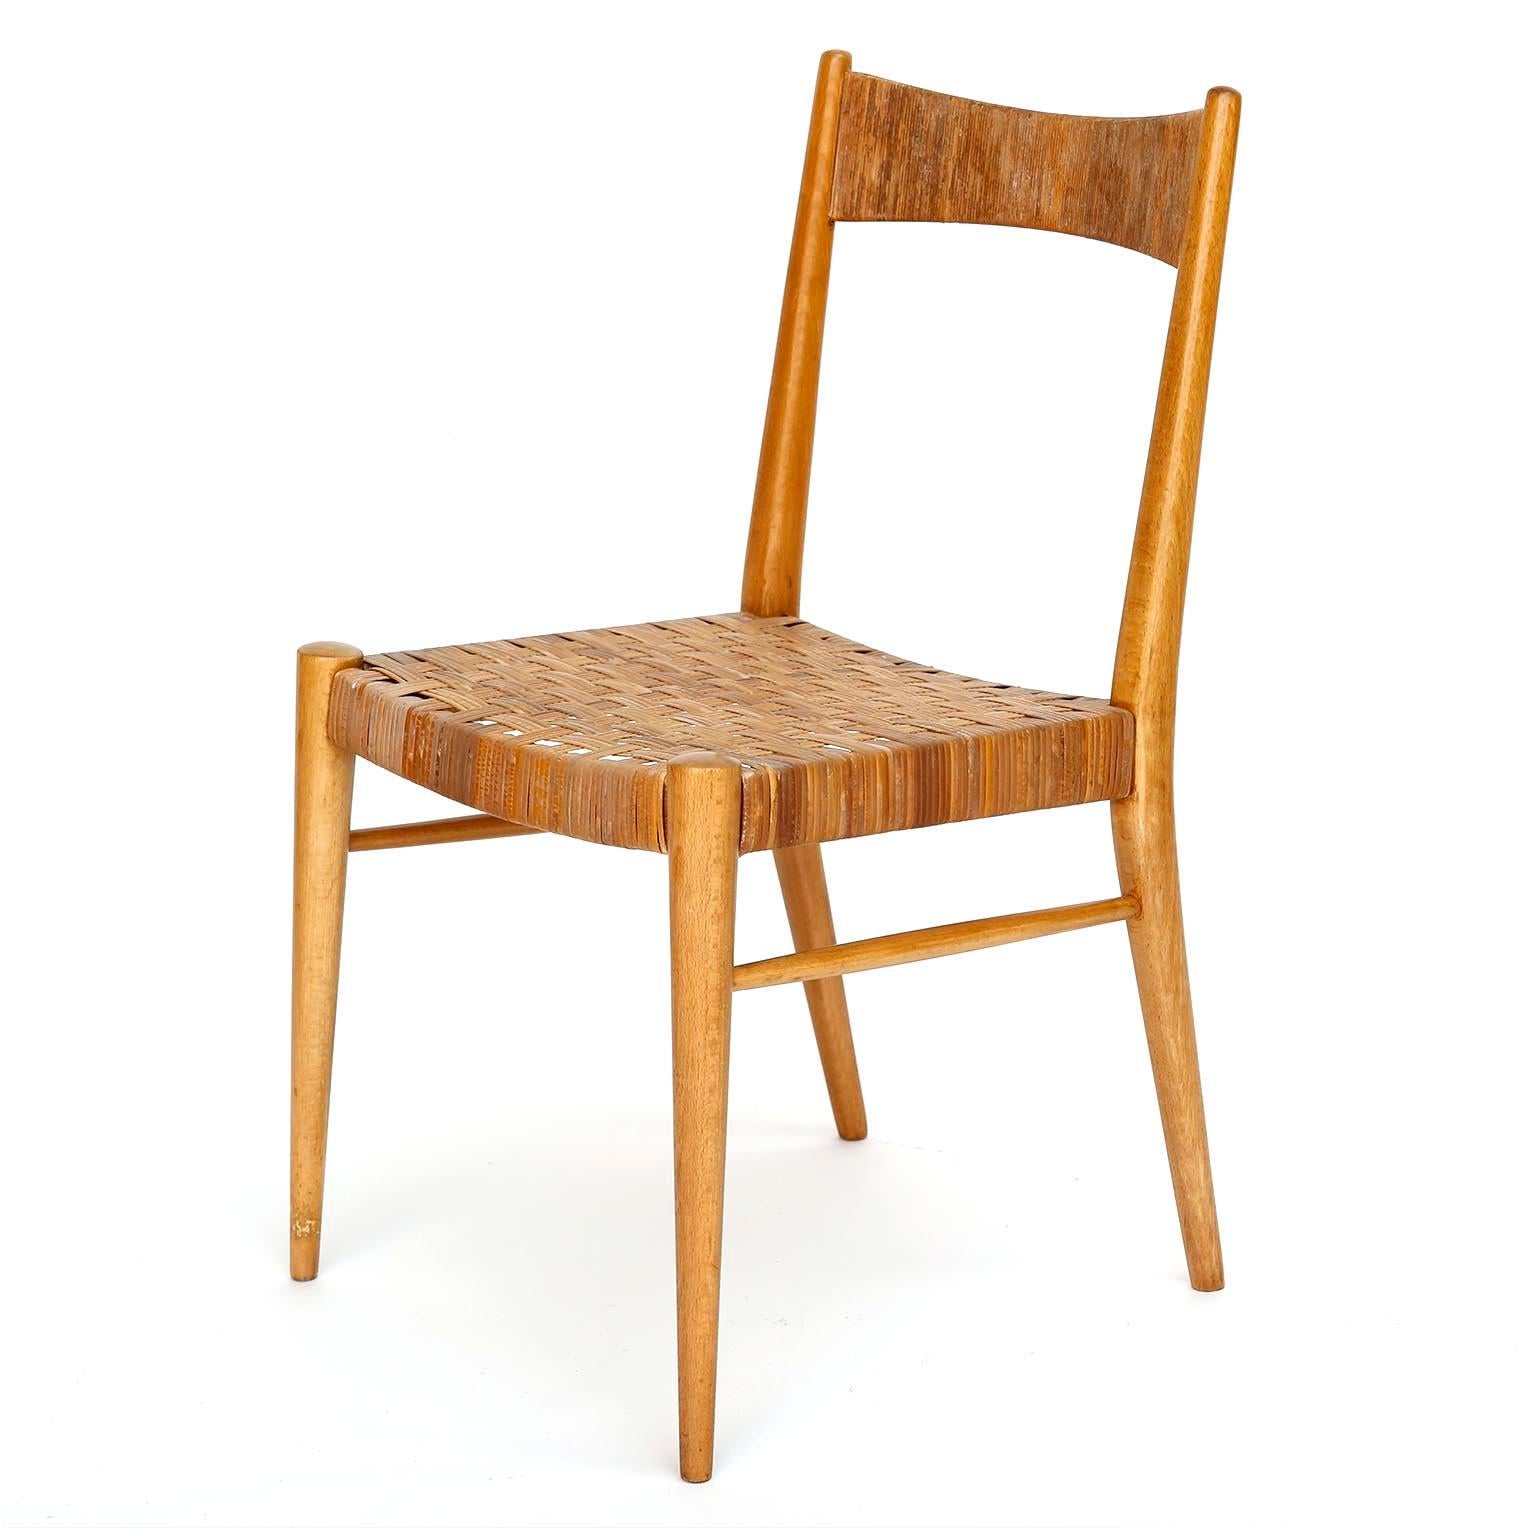 Four Anna-Lülja Praun Chairs, Wood Wicker Cane, 1950s For Sale 1